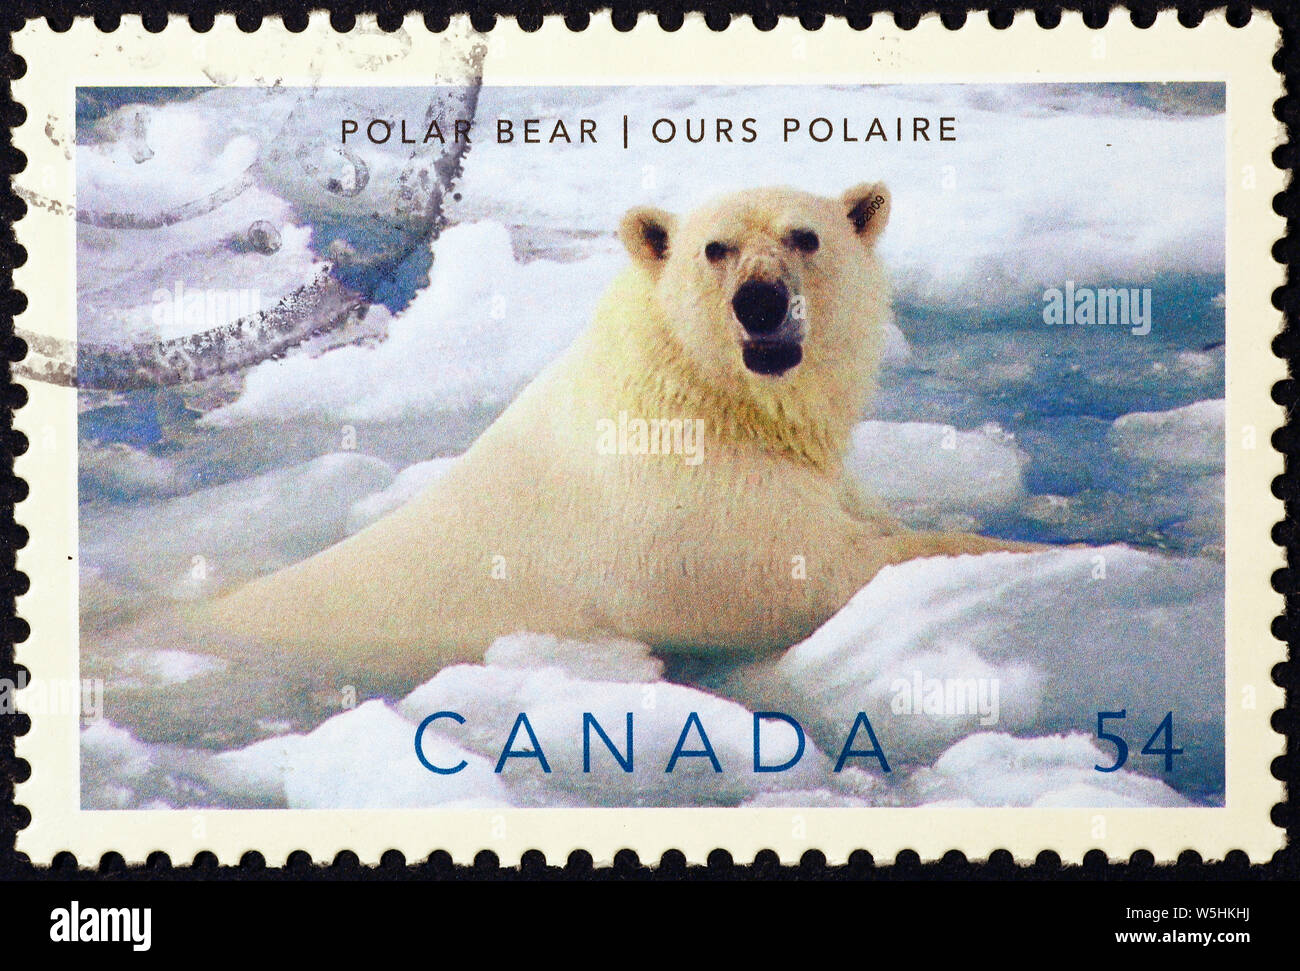 Polar bear swimming on canadian postage stamp Stock Photo - Alamy